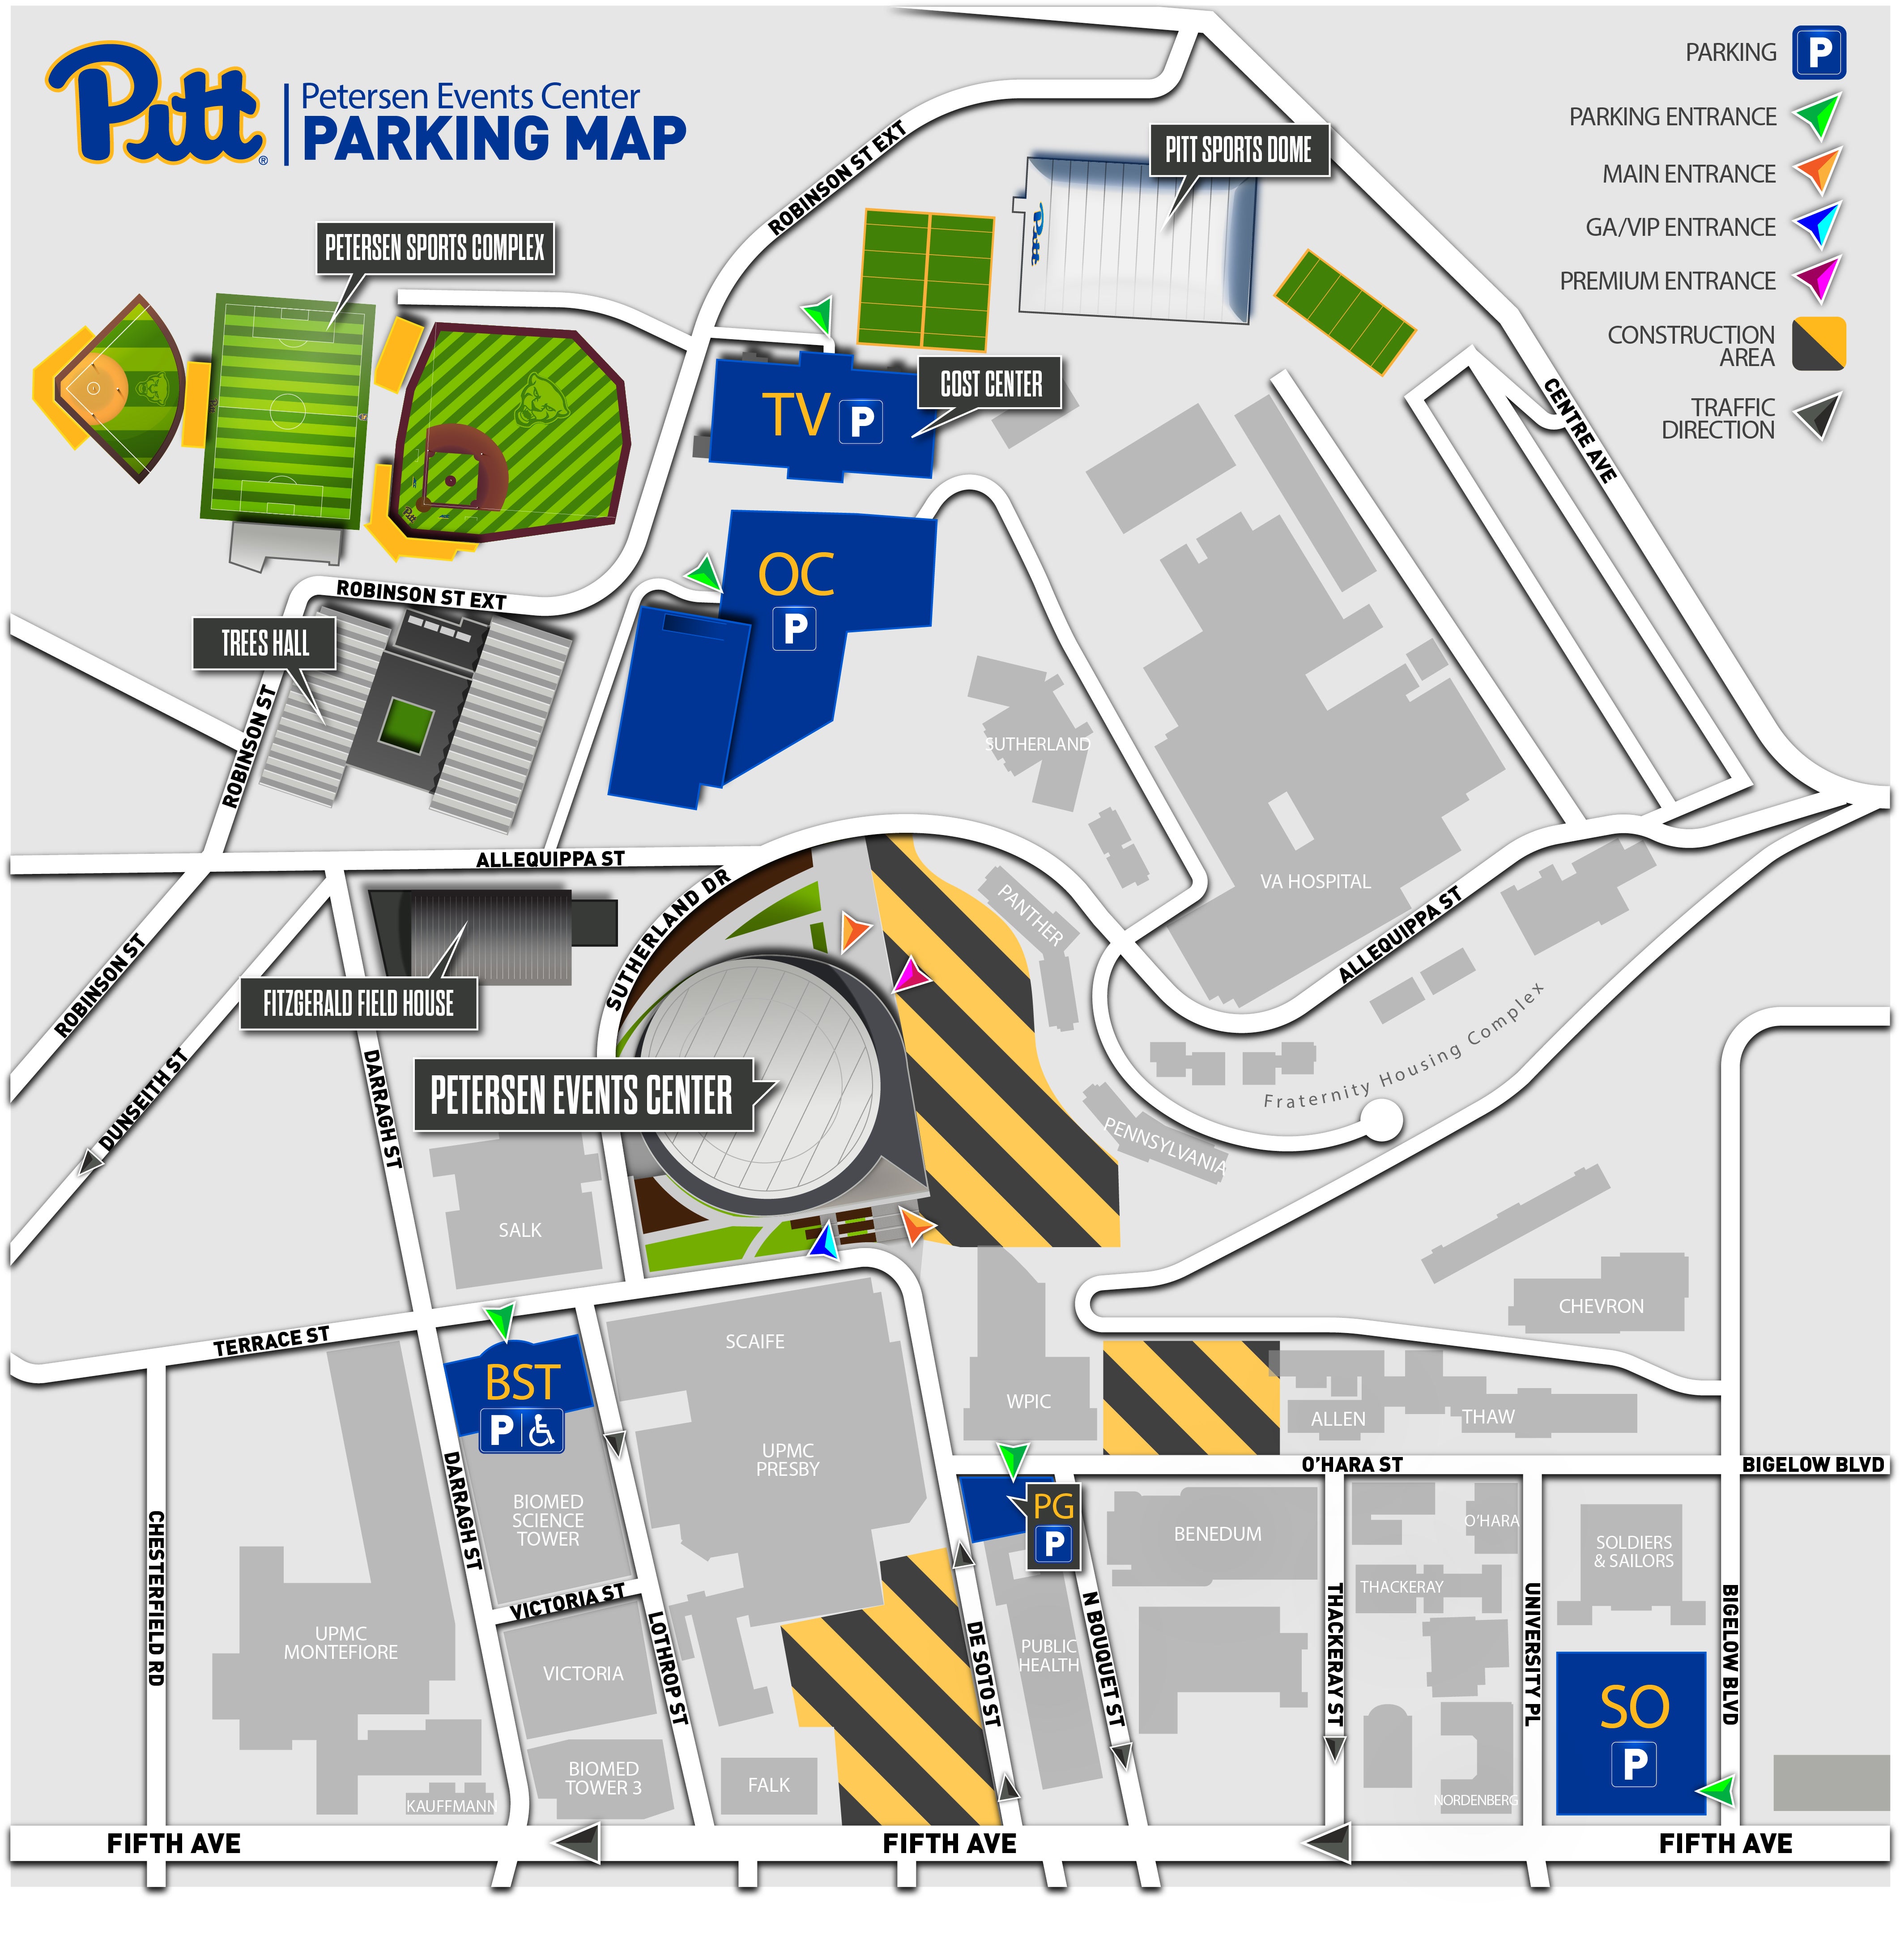 PEC_parking-map.jpg